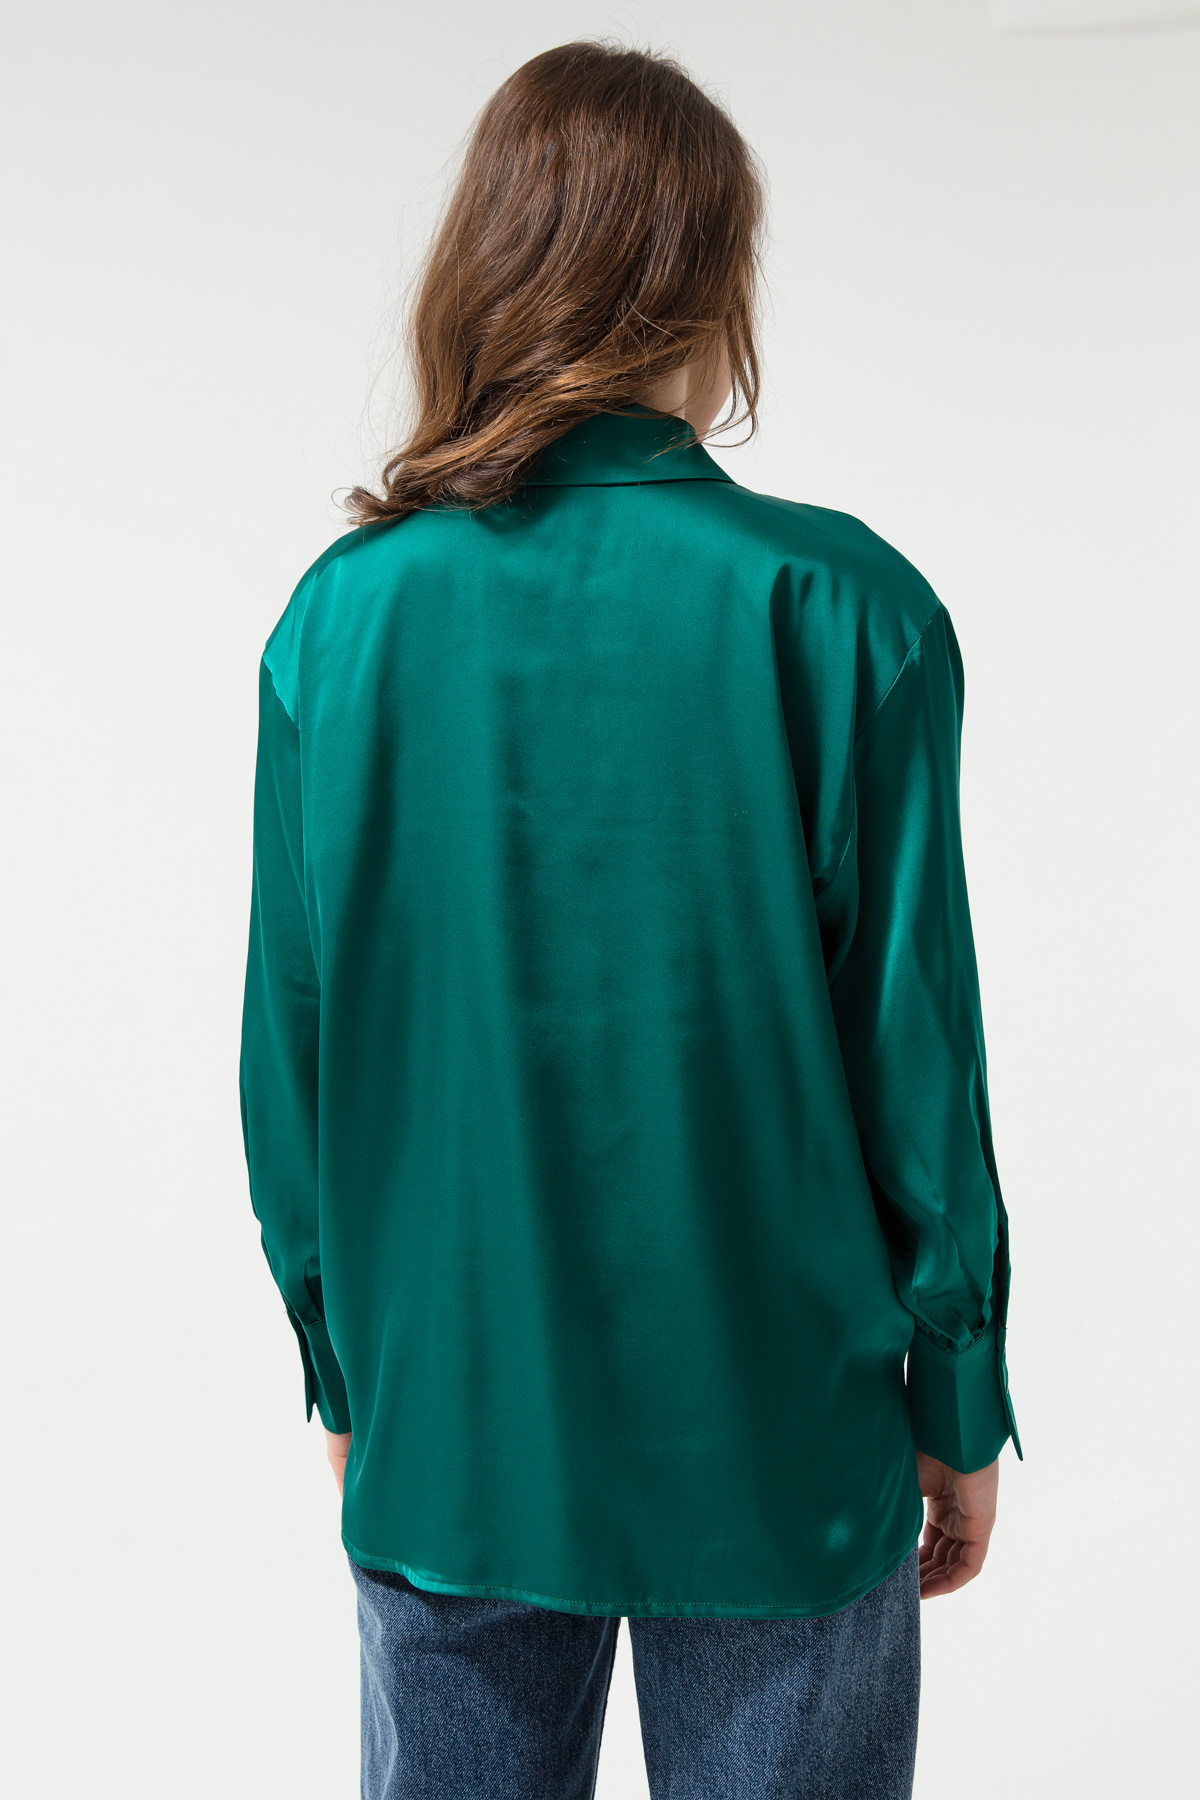 Women's Green Satin Shirt